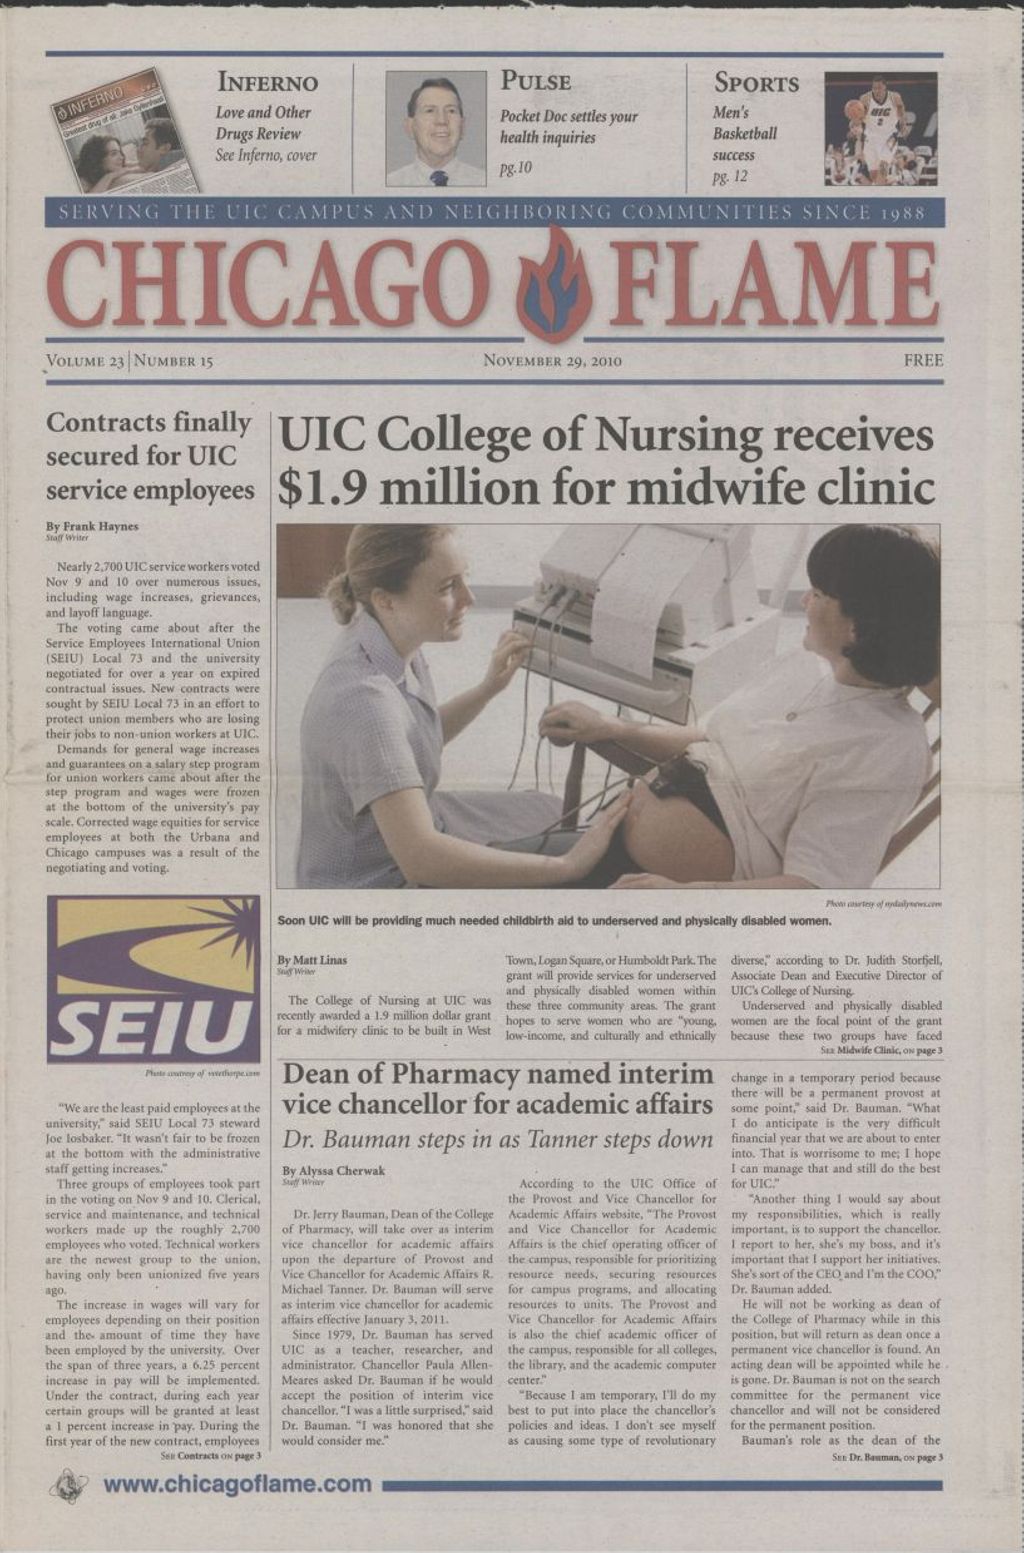 Chicago Flame (November 29, 2010)